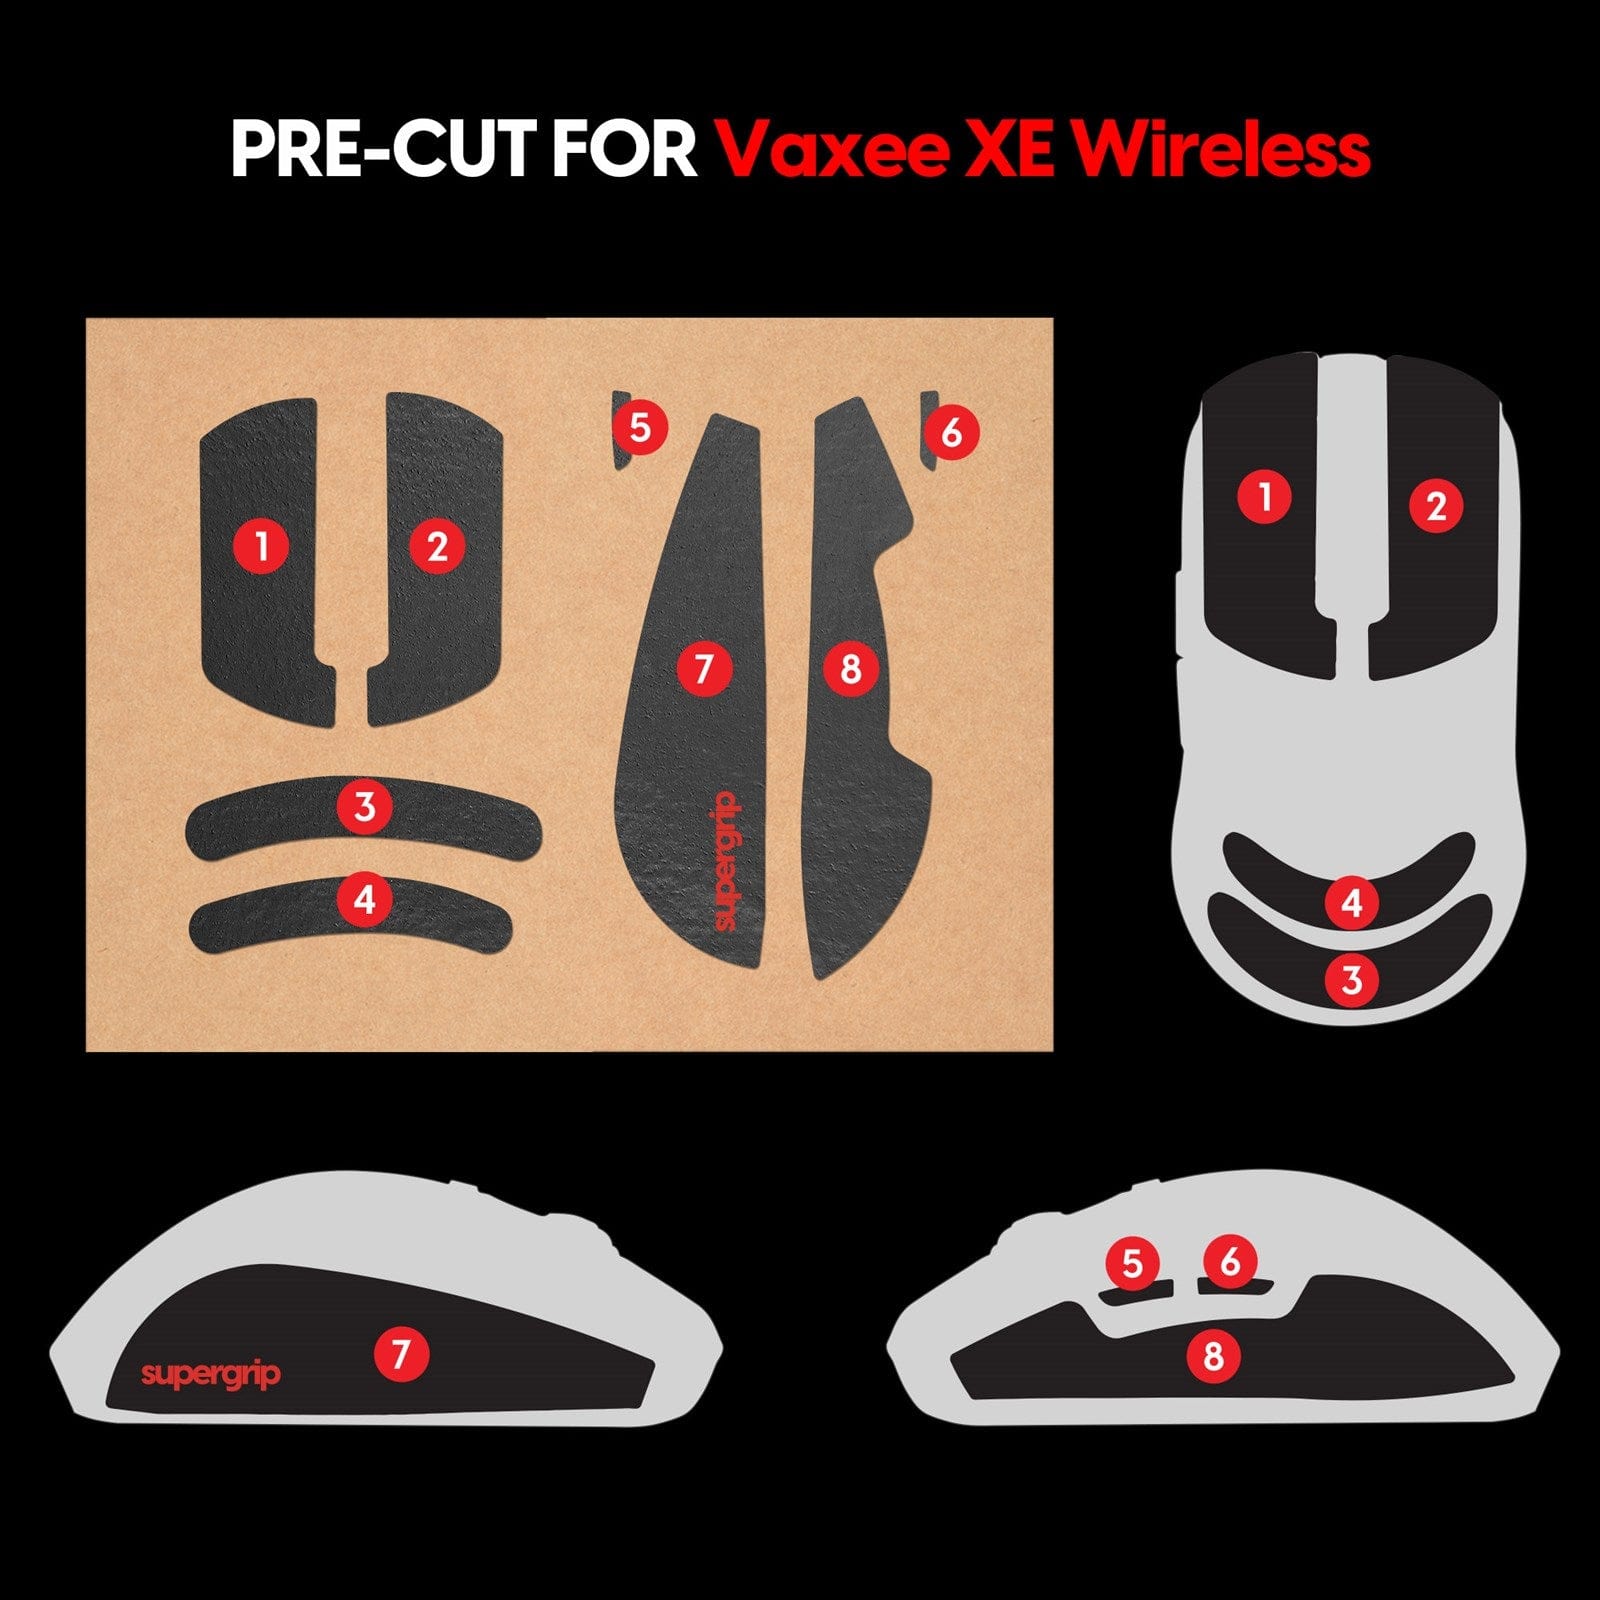 Miếng dán chống trượt Pulsar Supergrip - Grip Tape Precut for Vaxee XE Wireless